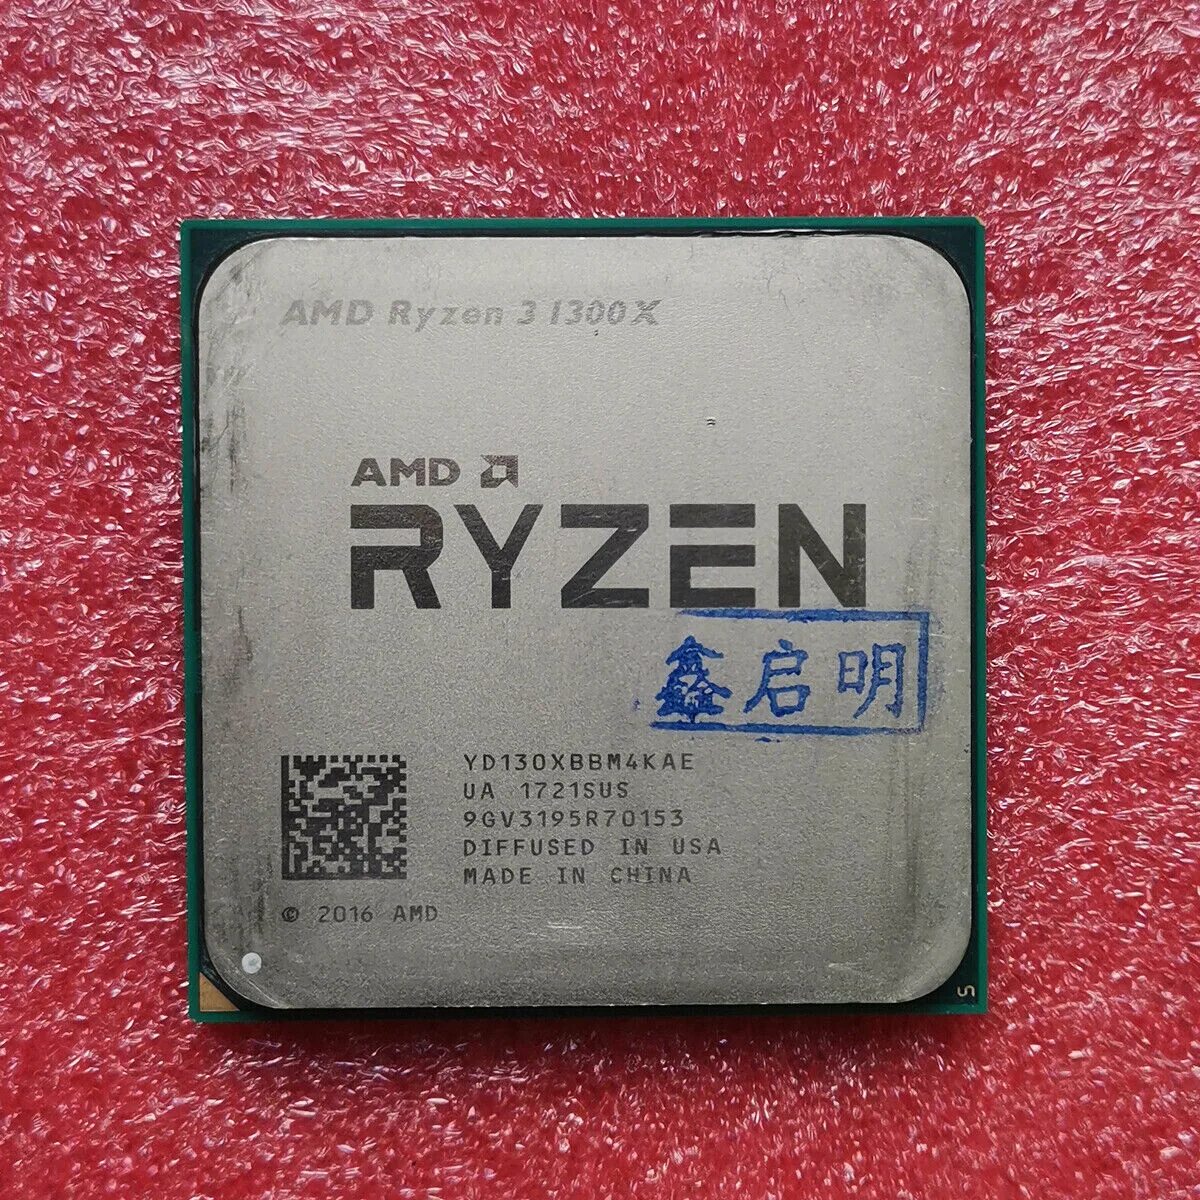 Ryzen 3 pro 1300. Ryzen 3 1200 Quad Core 3.10. AMD Ryzen 3 1300x. AMD Ryzen 5 1500x Quad-Core Processor 3.50. AMD Ryzen 3 1300x Quad-Core Processor.